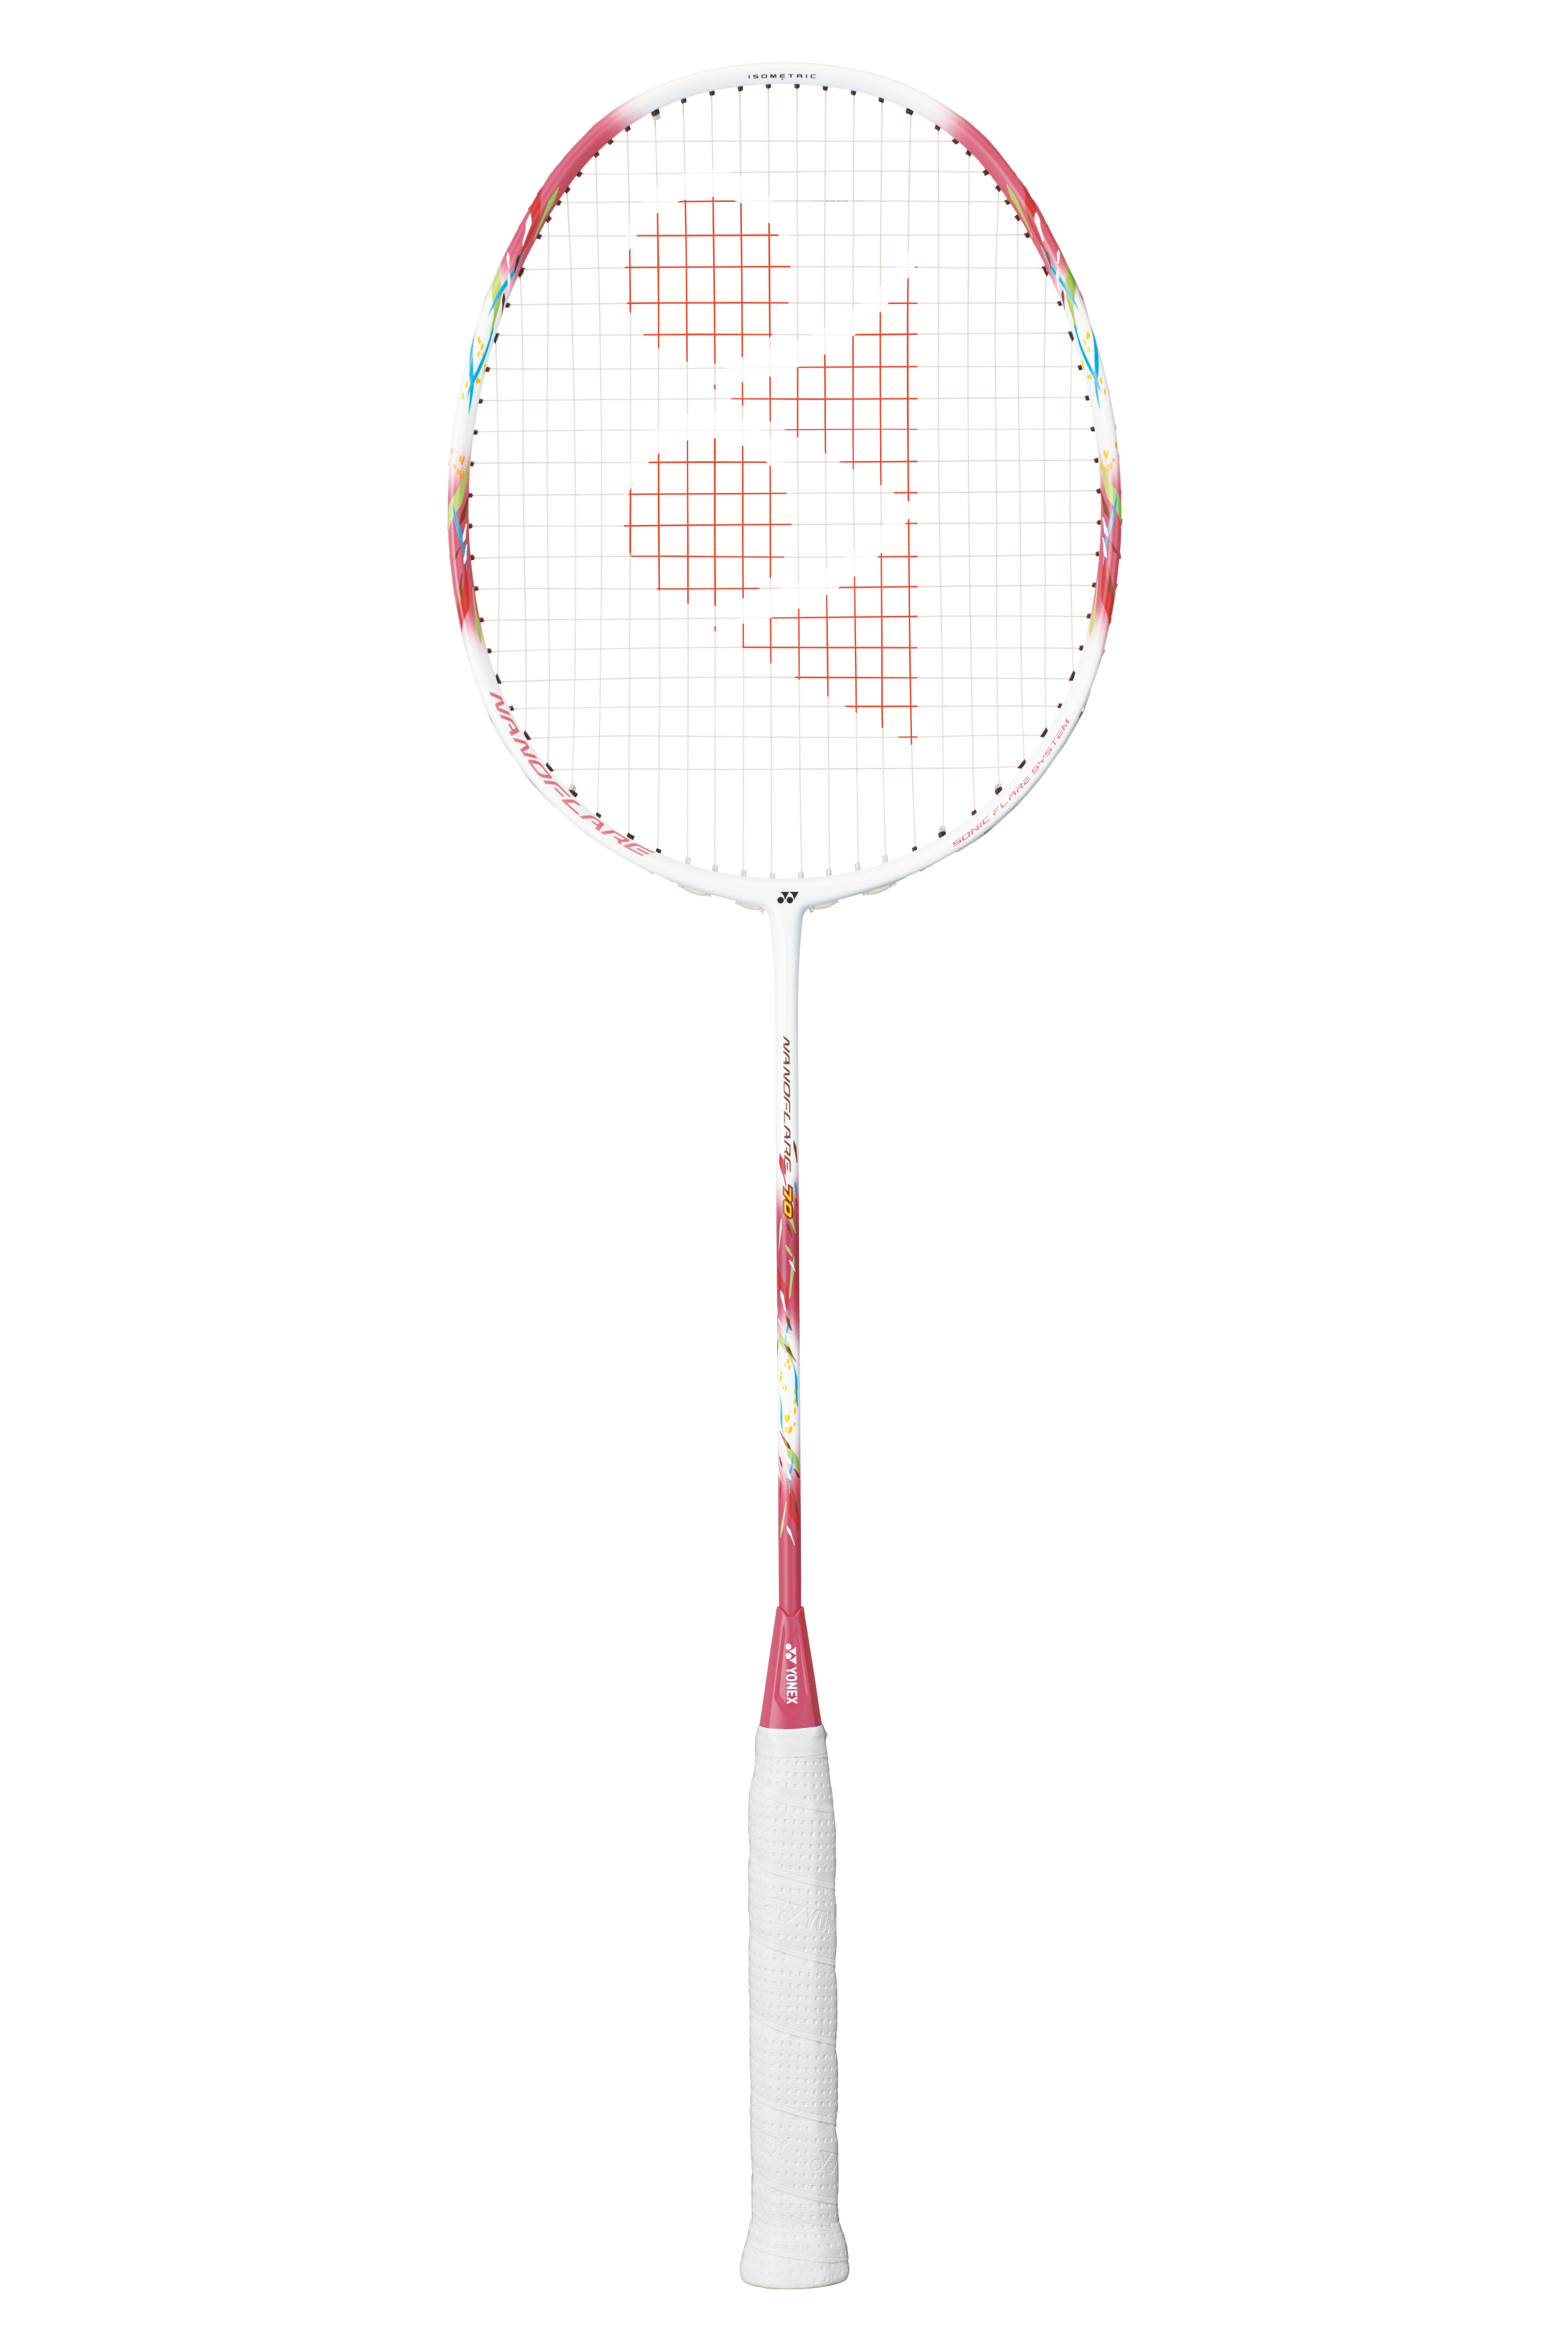 YONEX Badminton Racquet NANOFLARE 70 - 4U6 - Coral Pink colour - Frame only